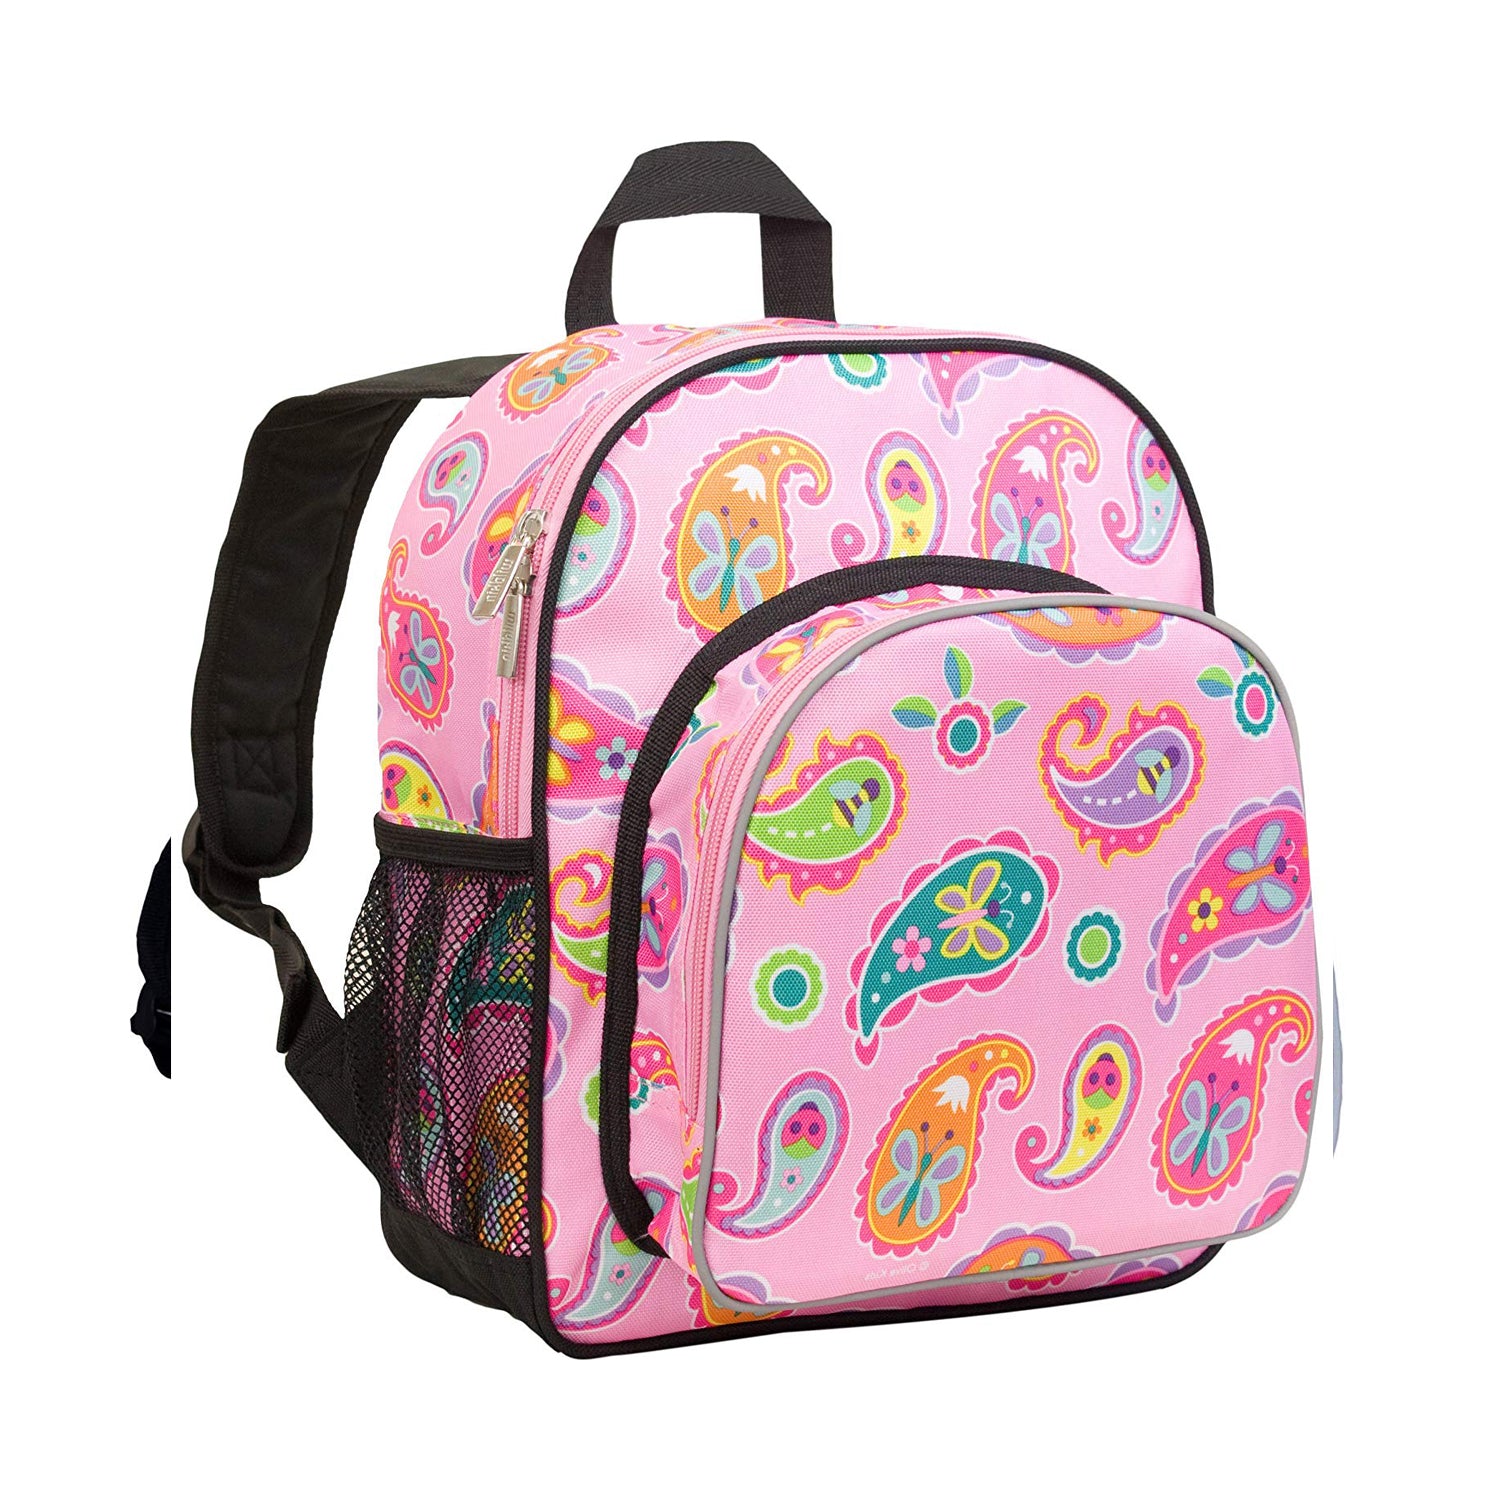 Paisley Dreams Toddler Backpack